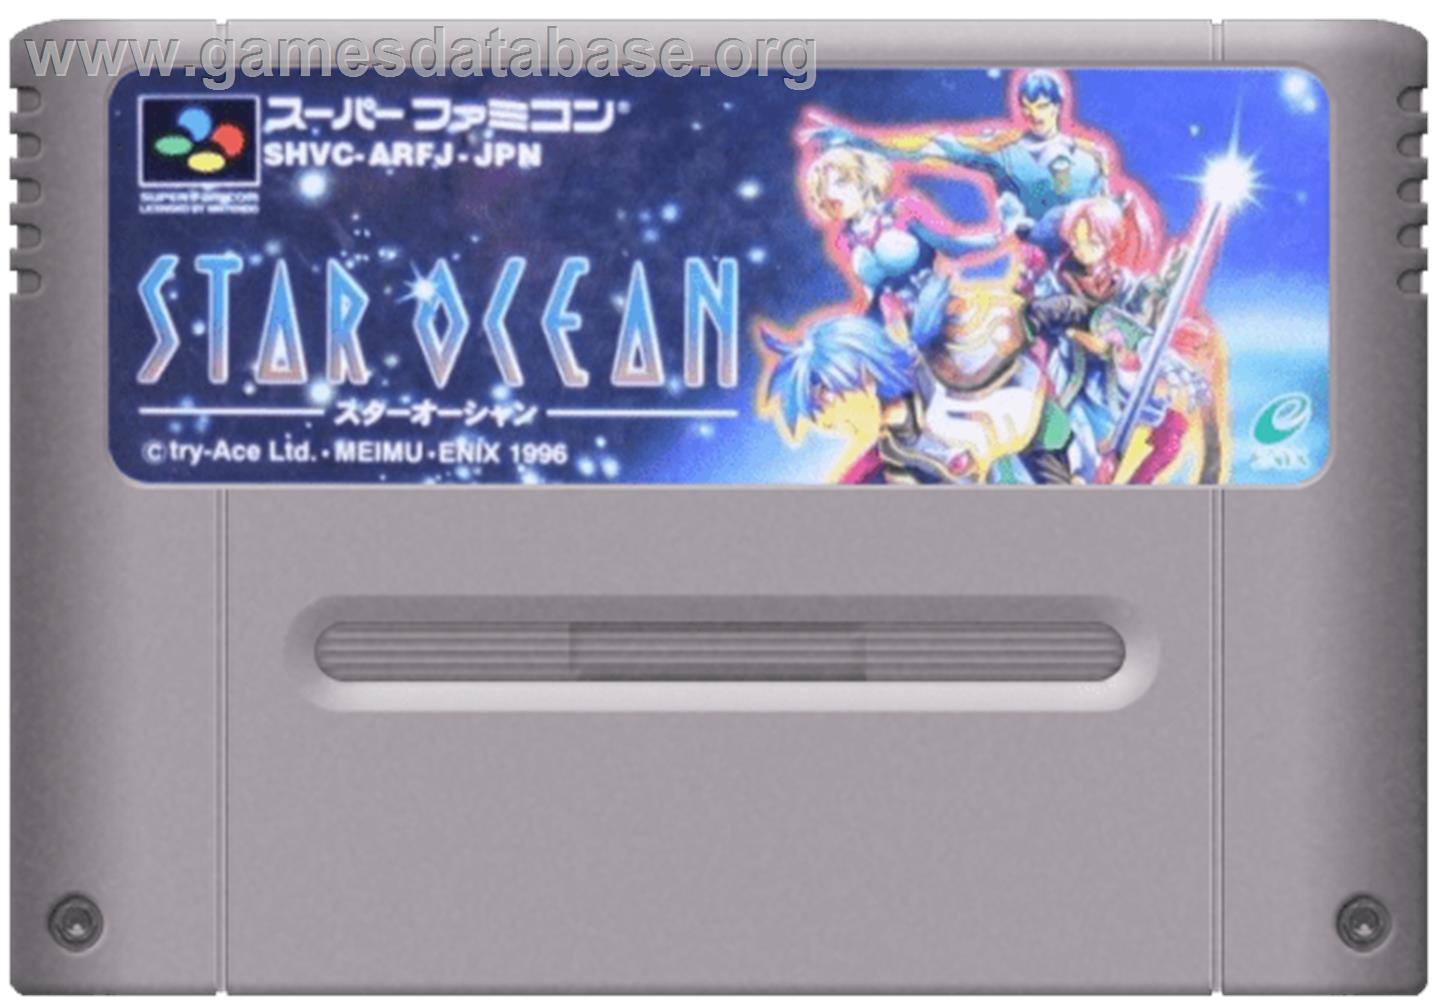 Star Ocean - Nintendo SNES - Artwork - Cartridge